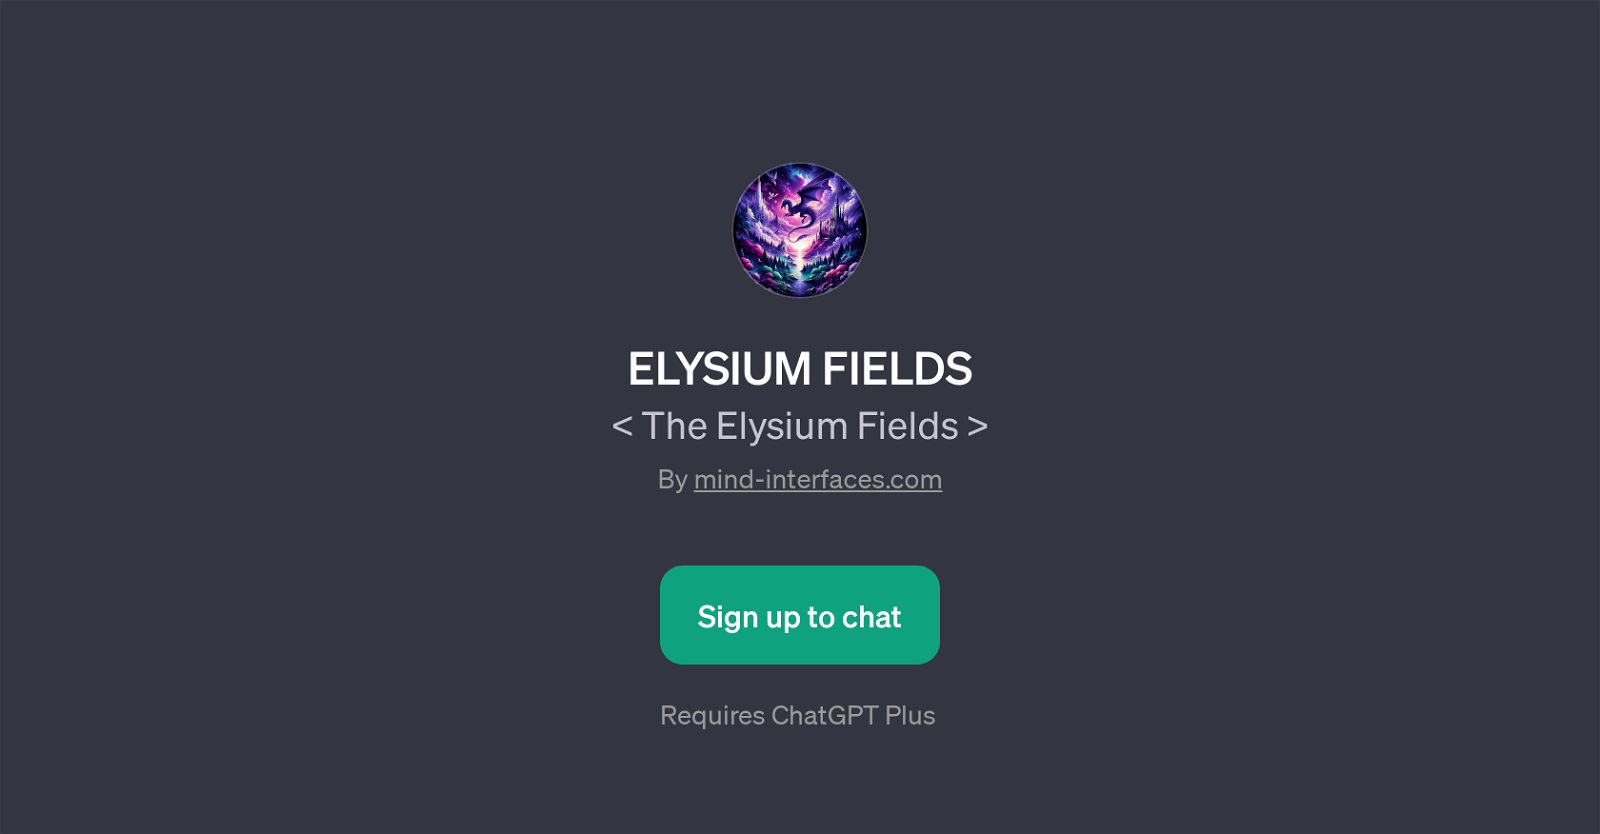 ELYSIUM FIELDS website